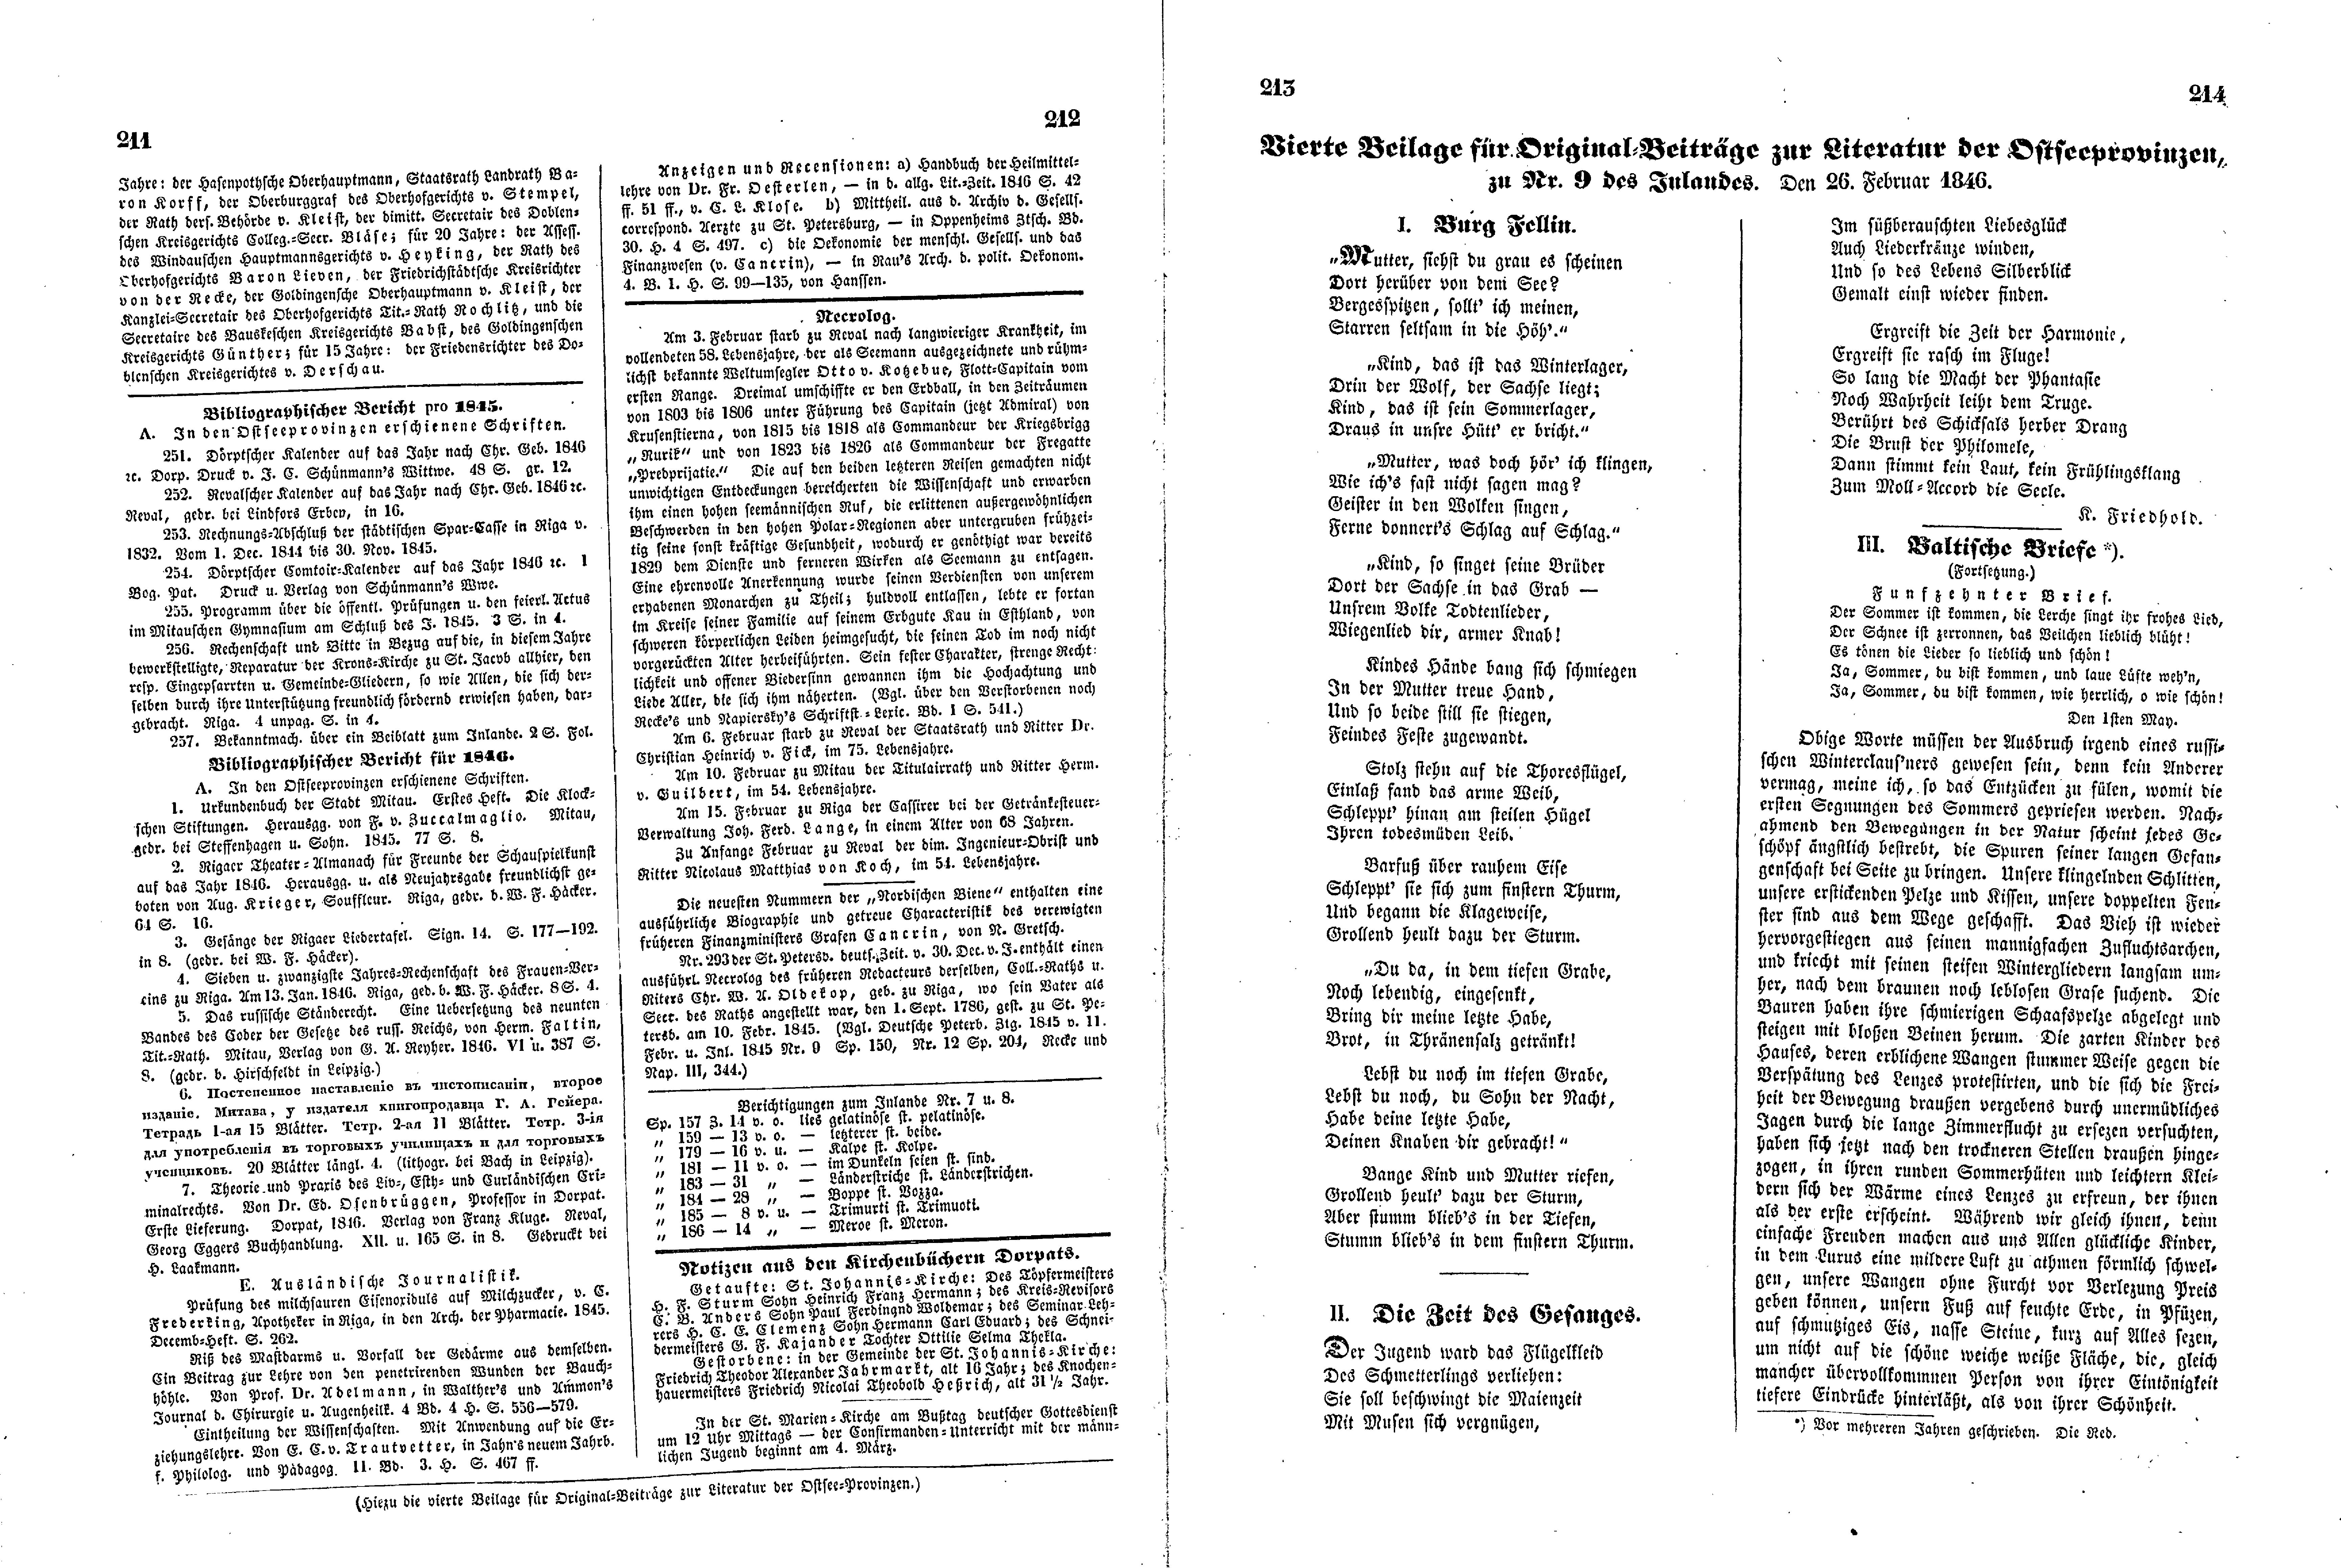 Das Inland [11] (1846) | 58. (211-214) Main body of text